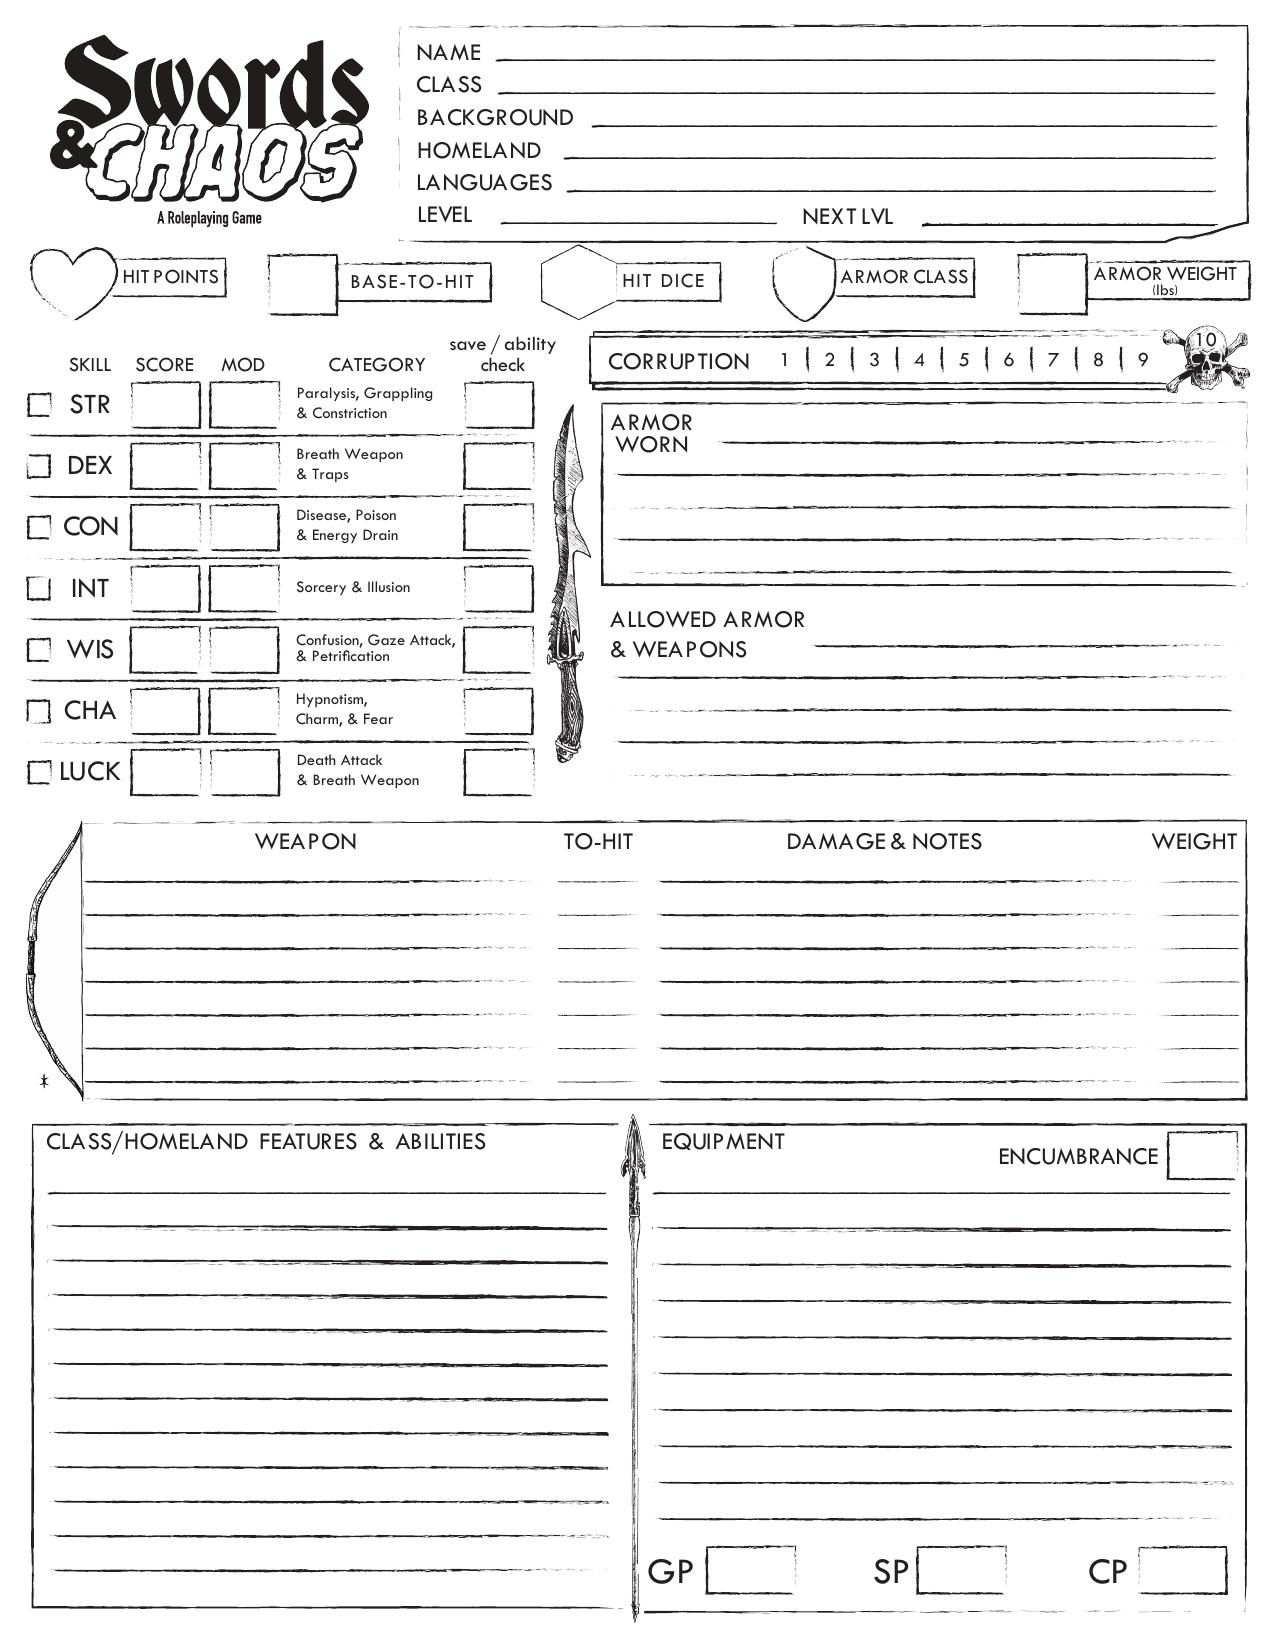 Swords & Chaos Character Sheet